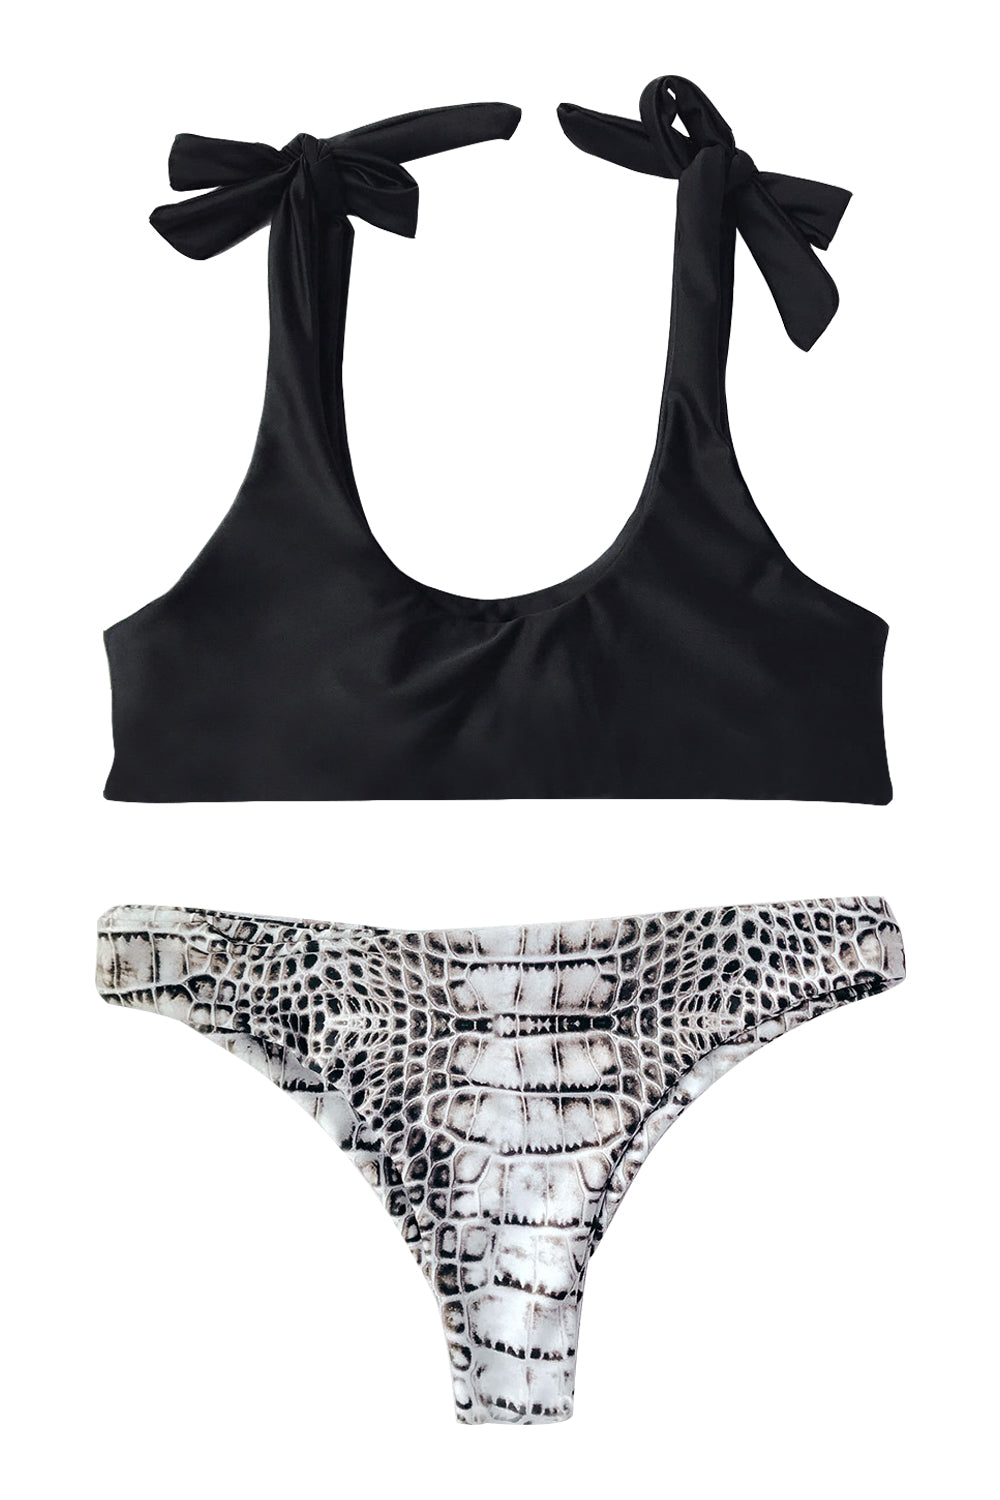 Iyasson Black Bow Top With Snake Pattern Bottom Bikini Set